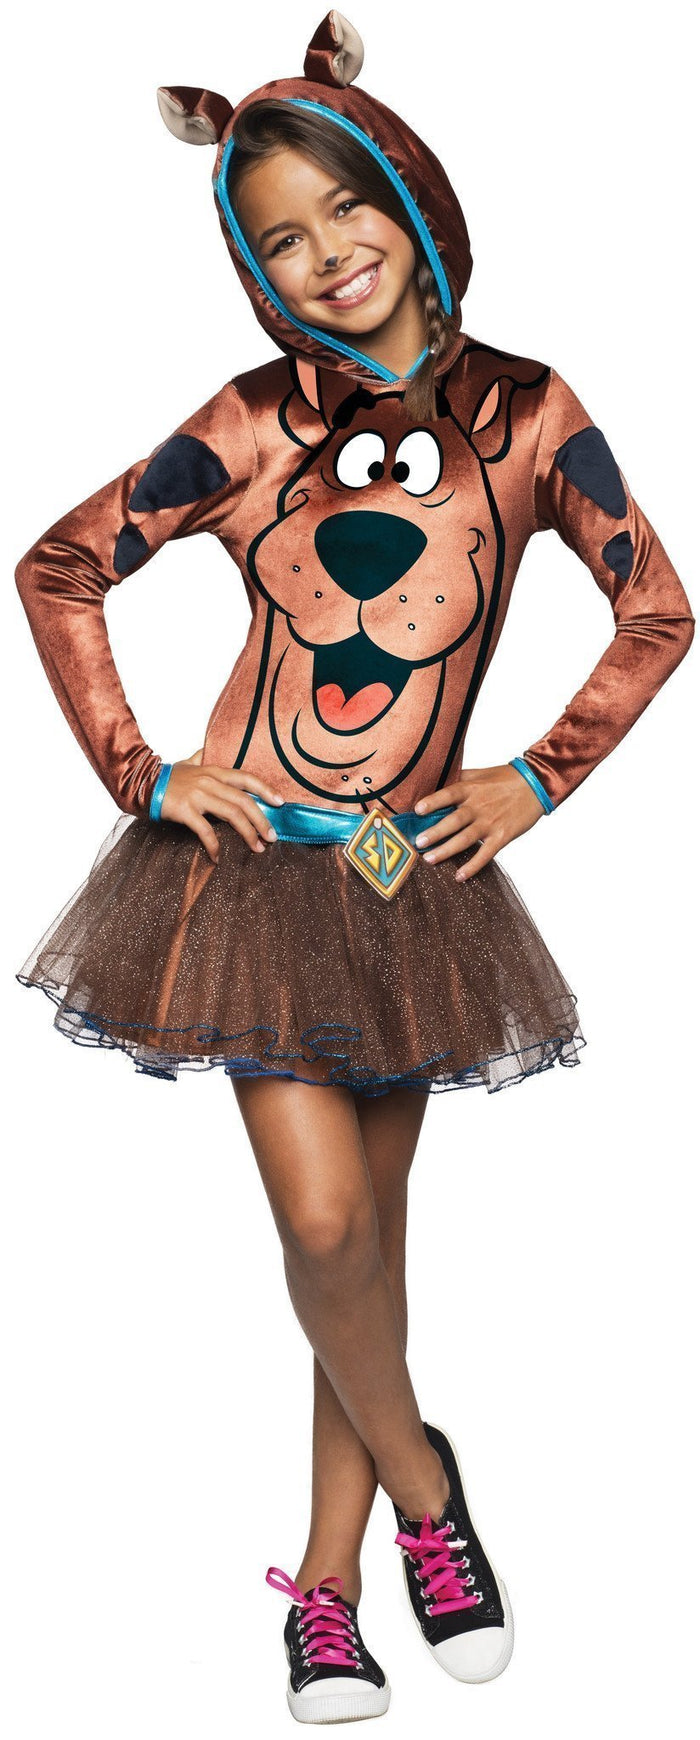 Scooby Doo Hooded Tutu Costume for Kids - Warner Bros Scooby Doo